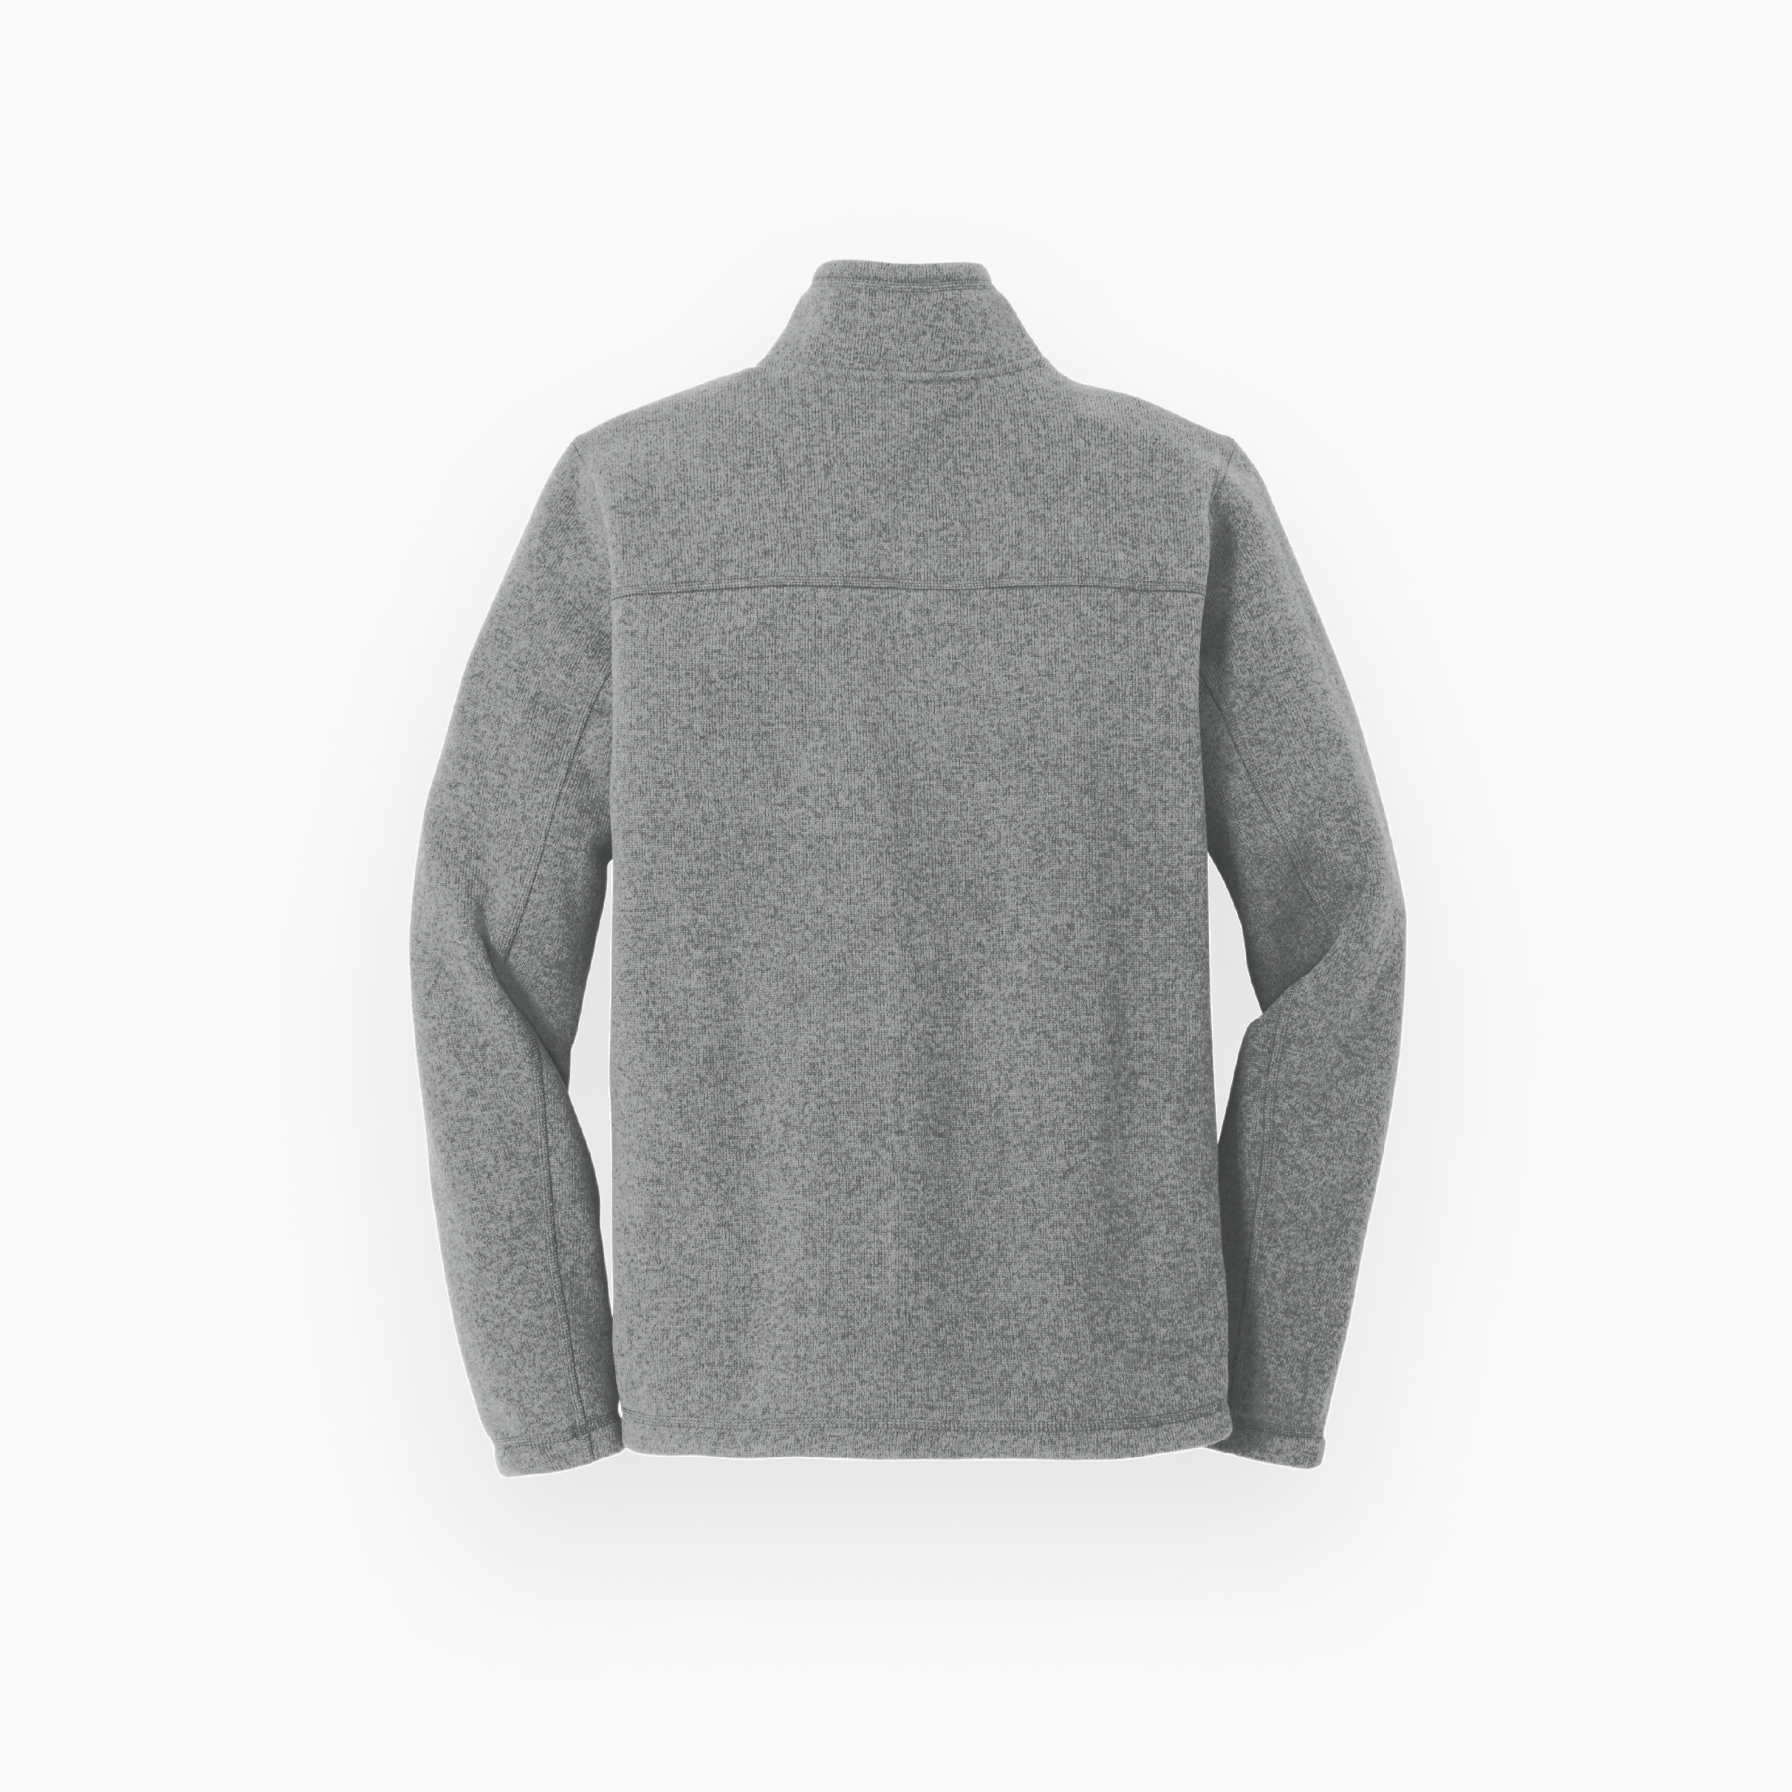 The North Face® Men's Sweater Fleece Jacket